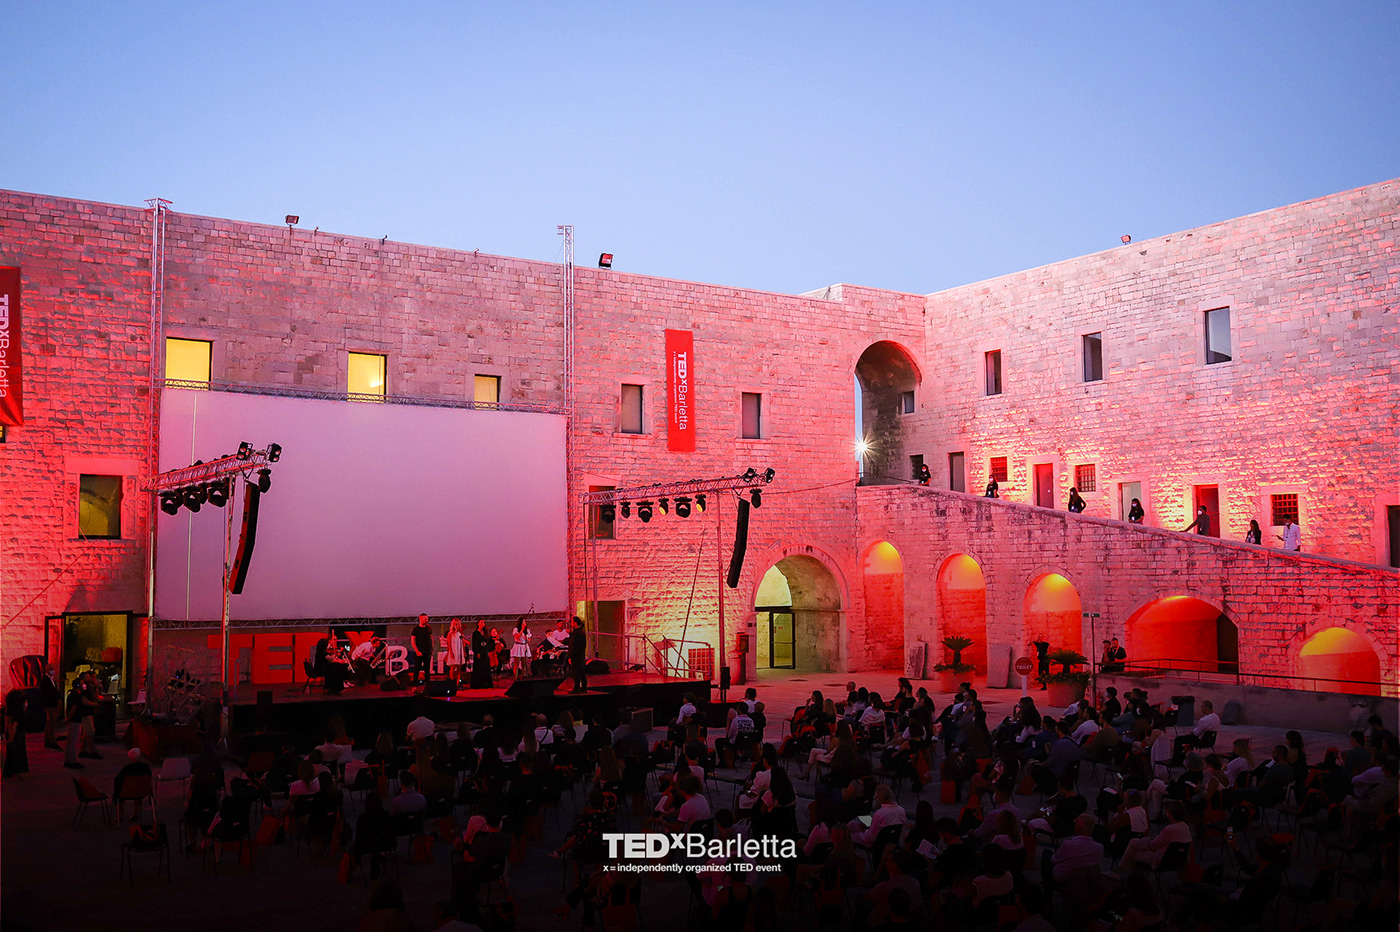 Barletta francesco poroli Ideas worth spreading sfide TED TEDx tedxbarletta willwoosh